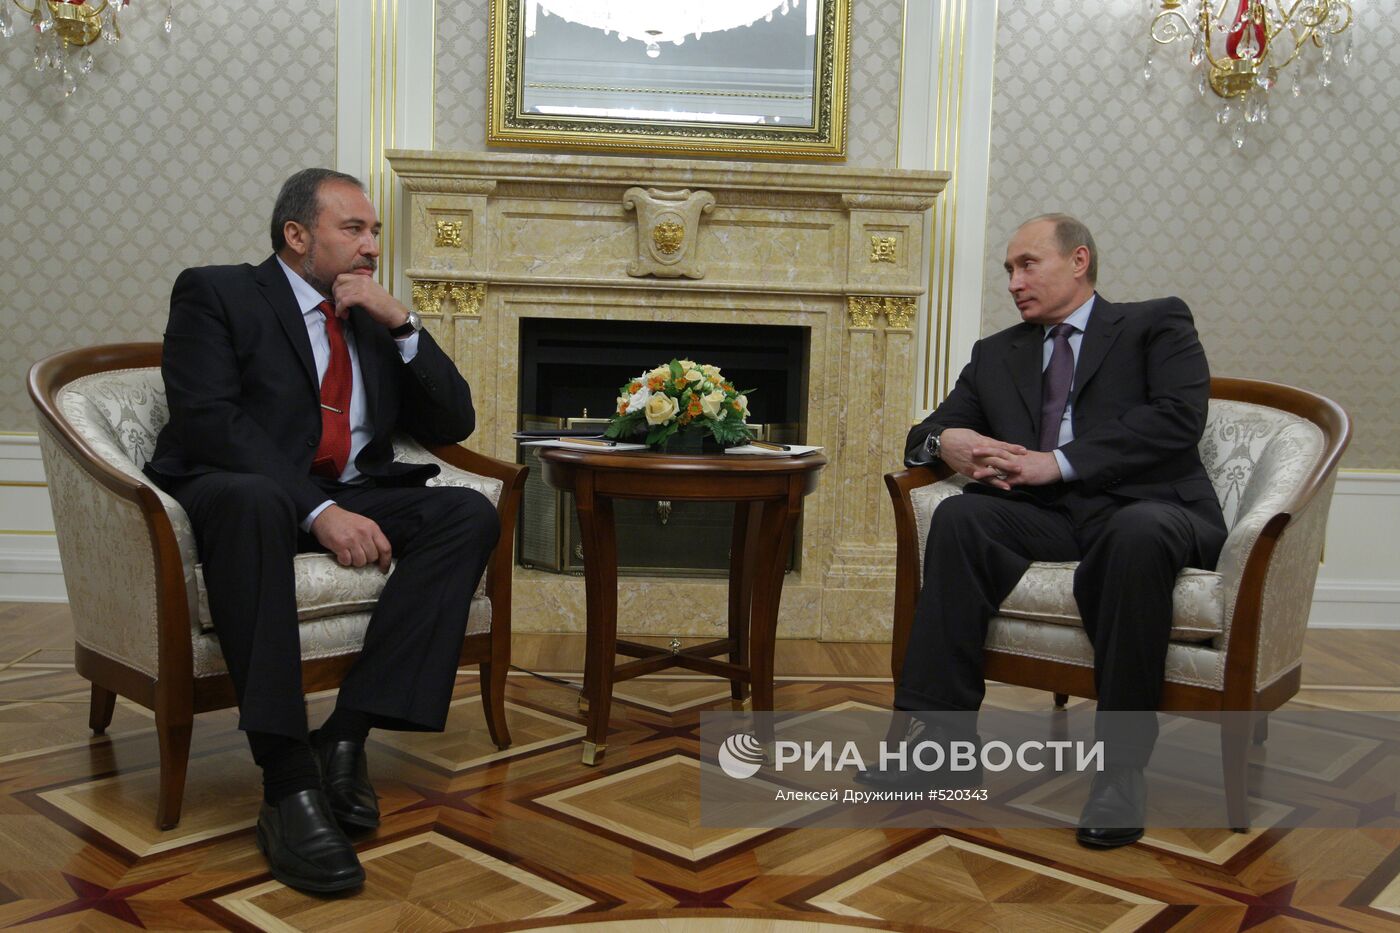 Встреча Владимира Путина с Авигдором Либерманом